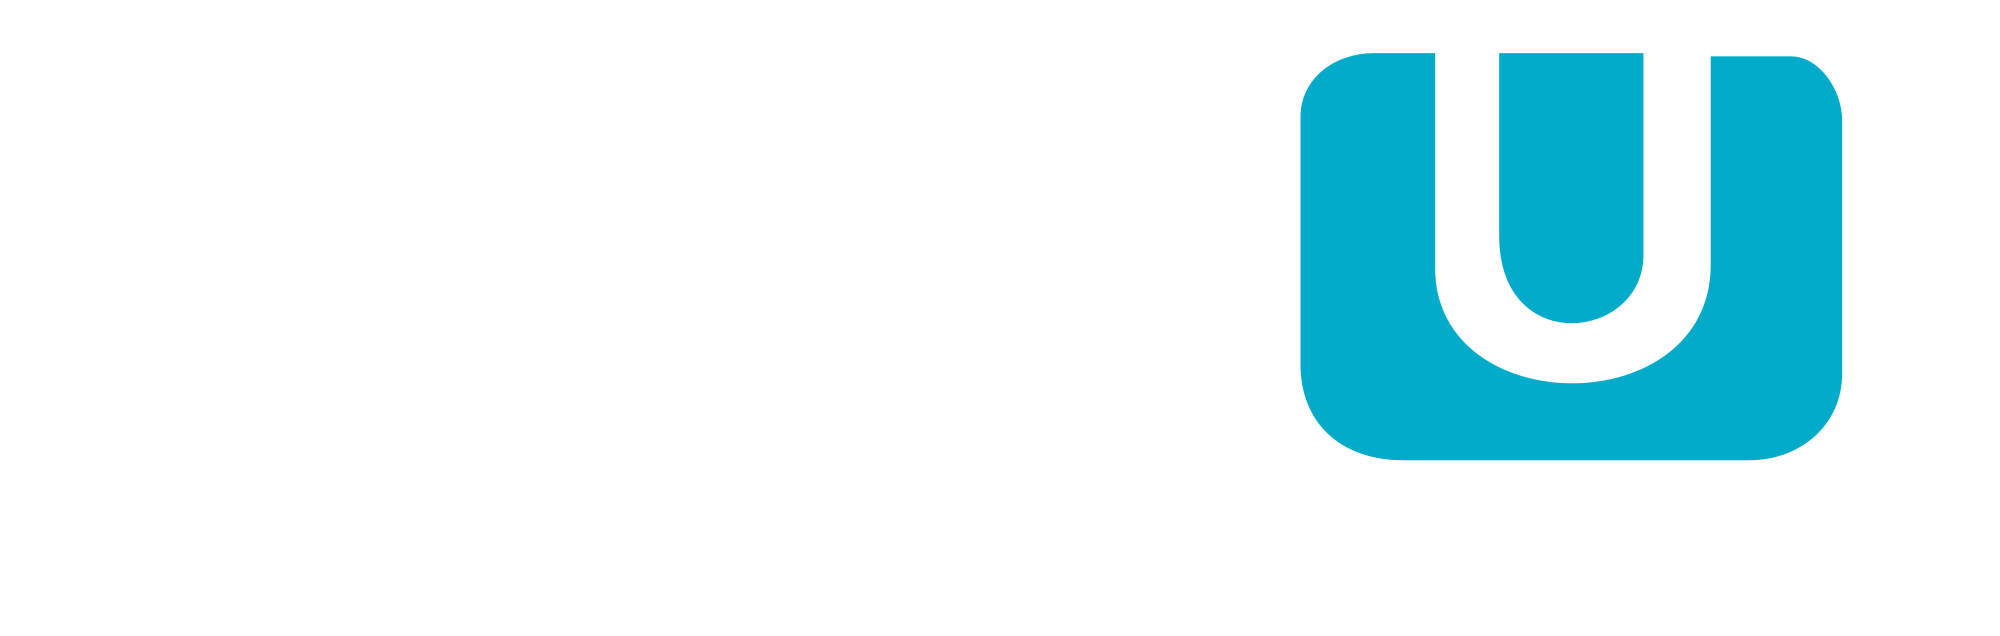 Wii U Logo.png